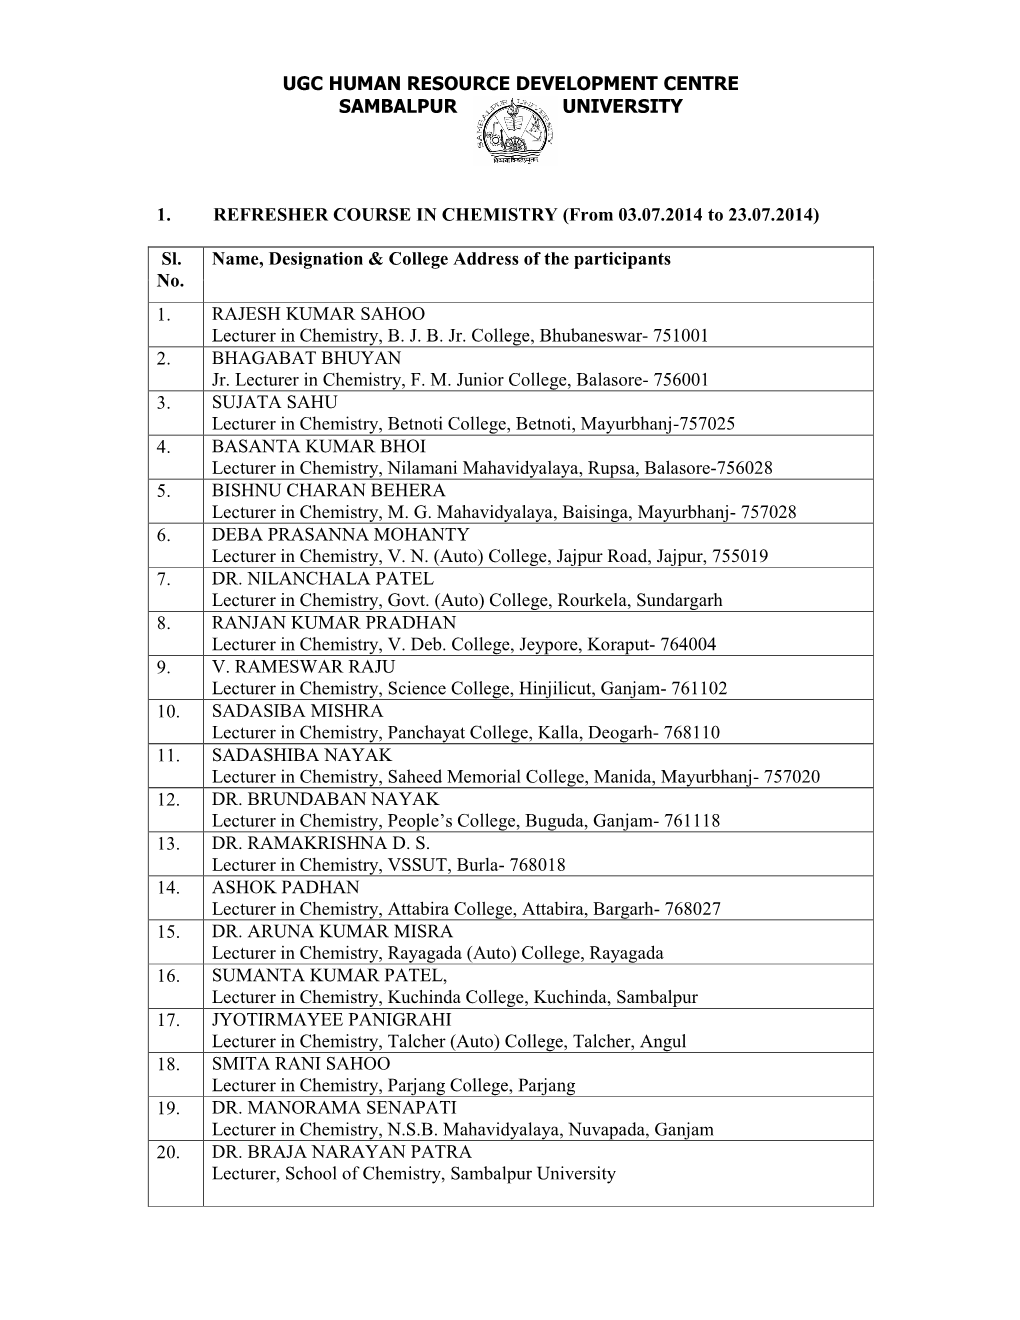 UGC HUMAN RESOURCE DEVELOPMENT CENTRE SAMBALPUR UNIVERSITY 1. REFRESHER COURSE in CHEMISTRY (From 03.07.2014 to 23.07.2014)